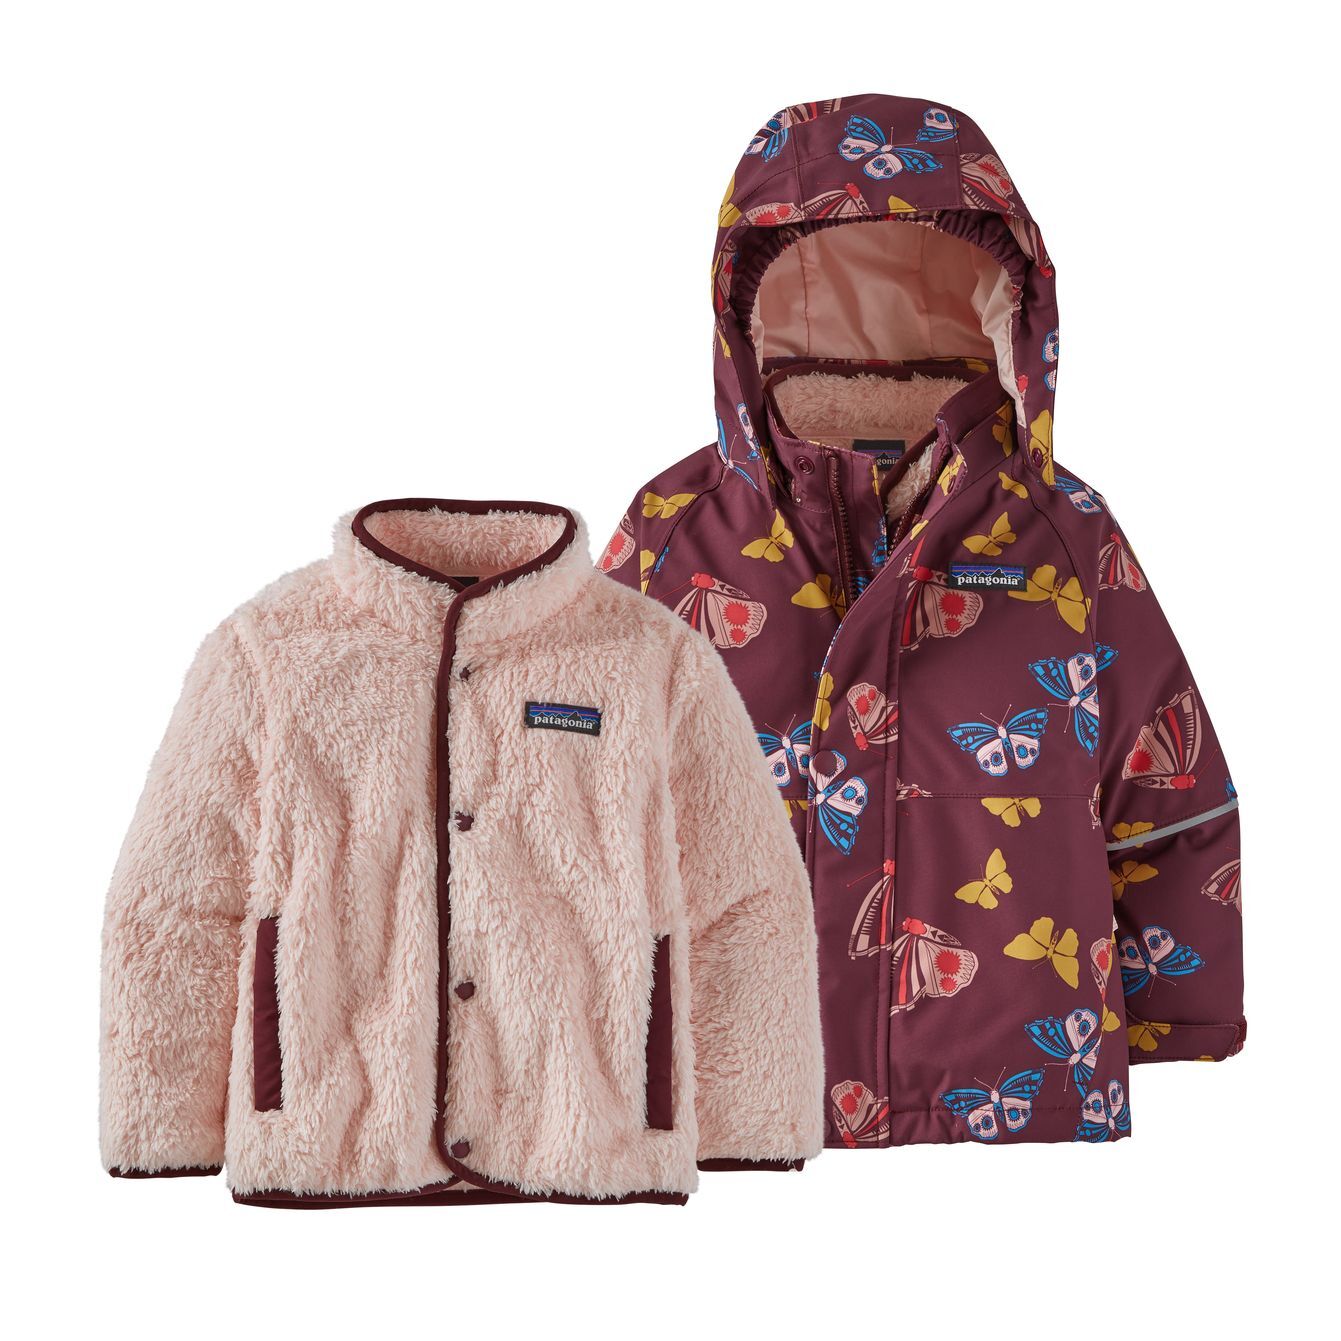 Patagonia Baby All Seasons 3-in-1 Jacket - Chaqueta impermeable - Niños